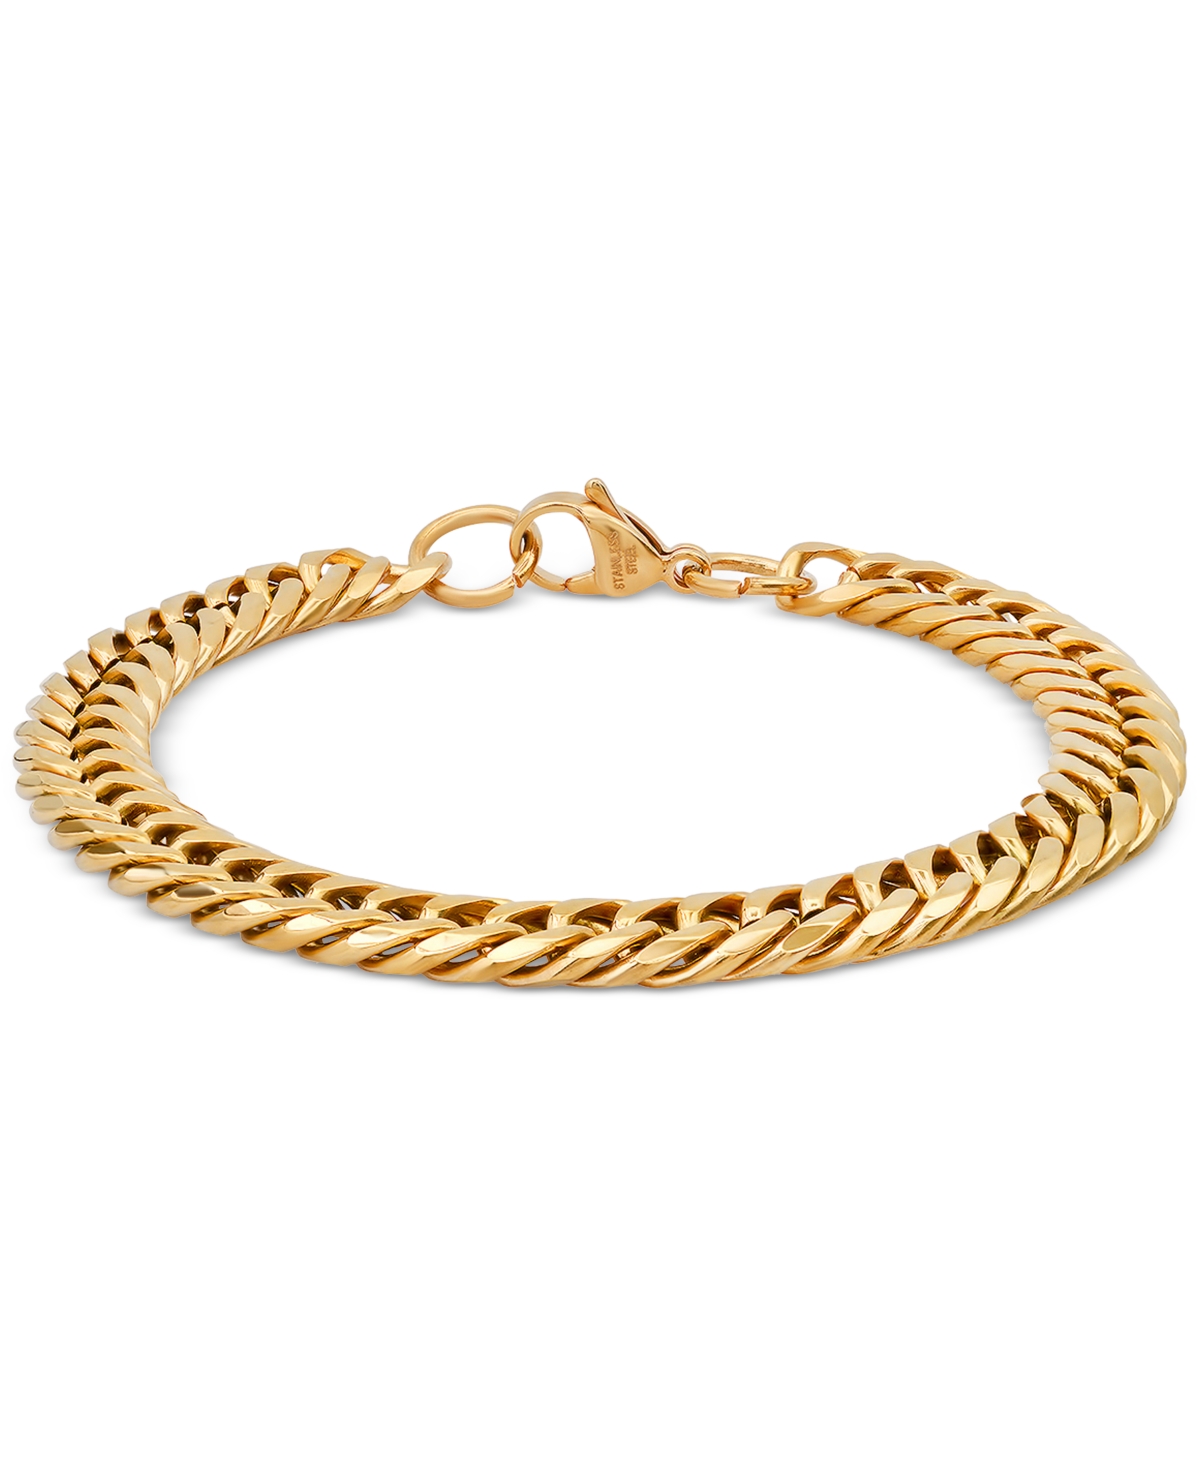 Men's Stainless Steel Cuban Link Chain Bracelet - Gold